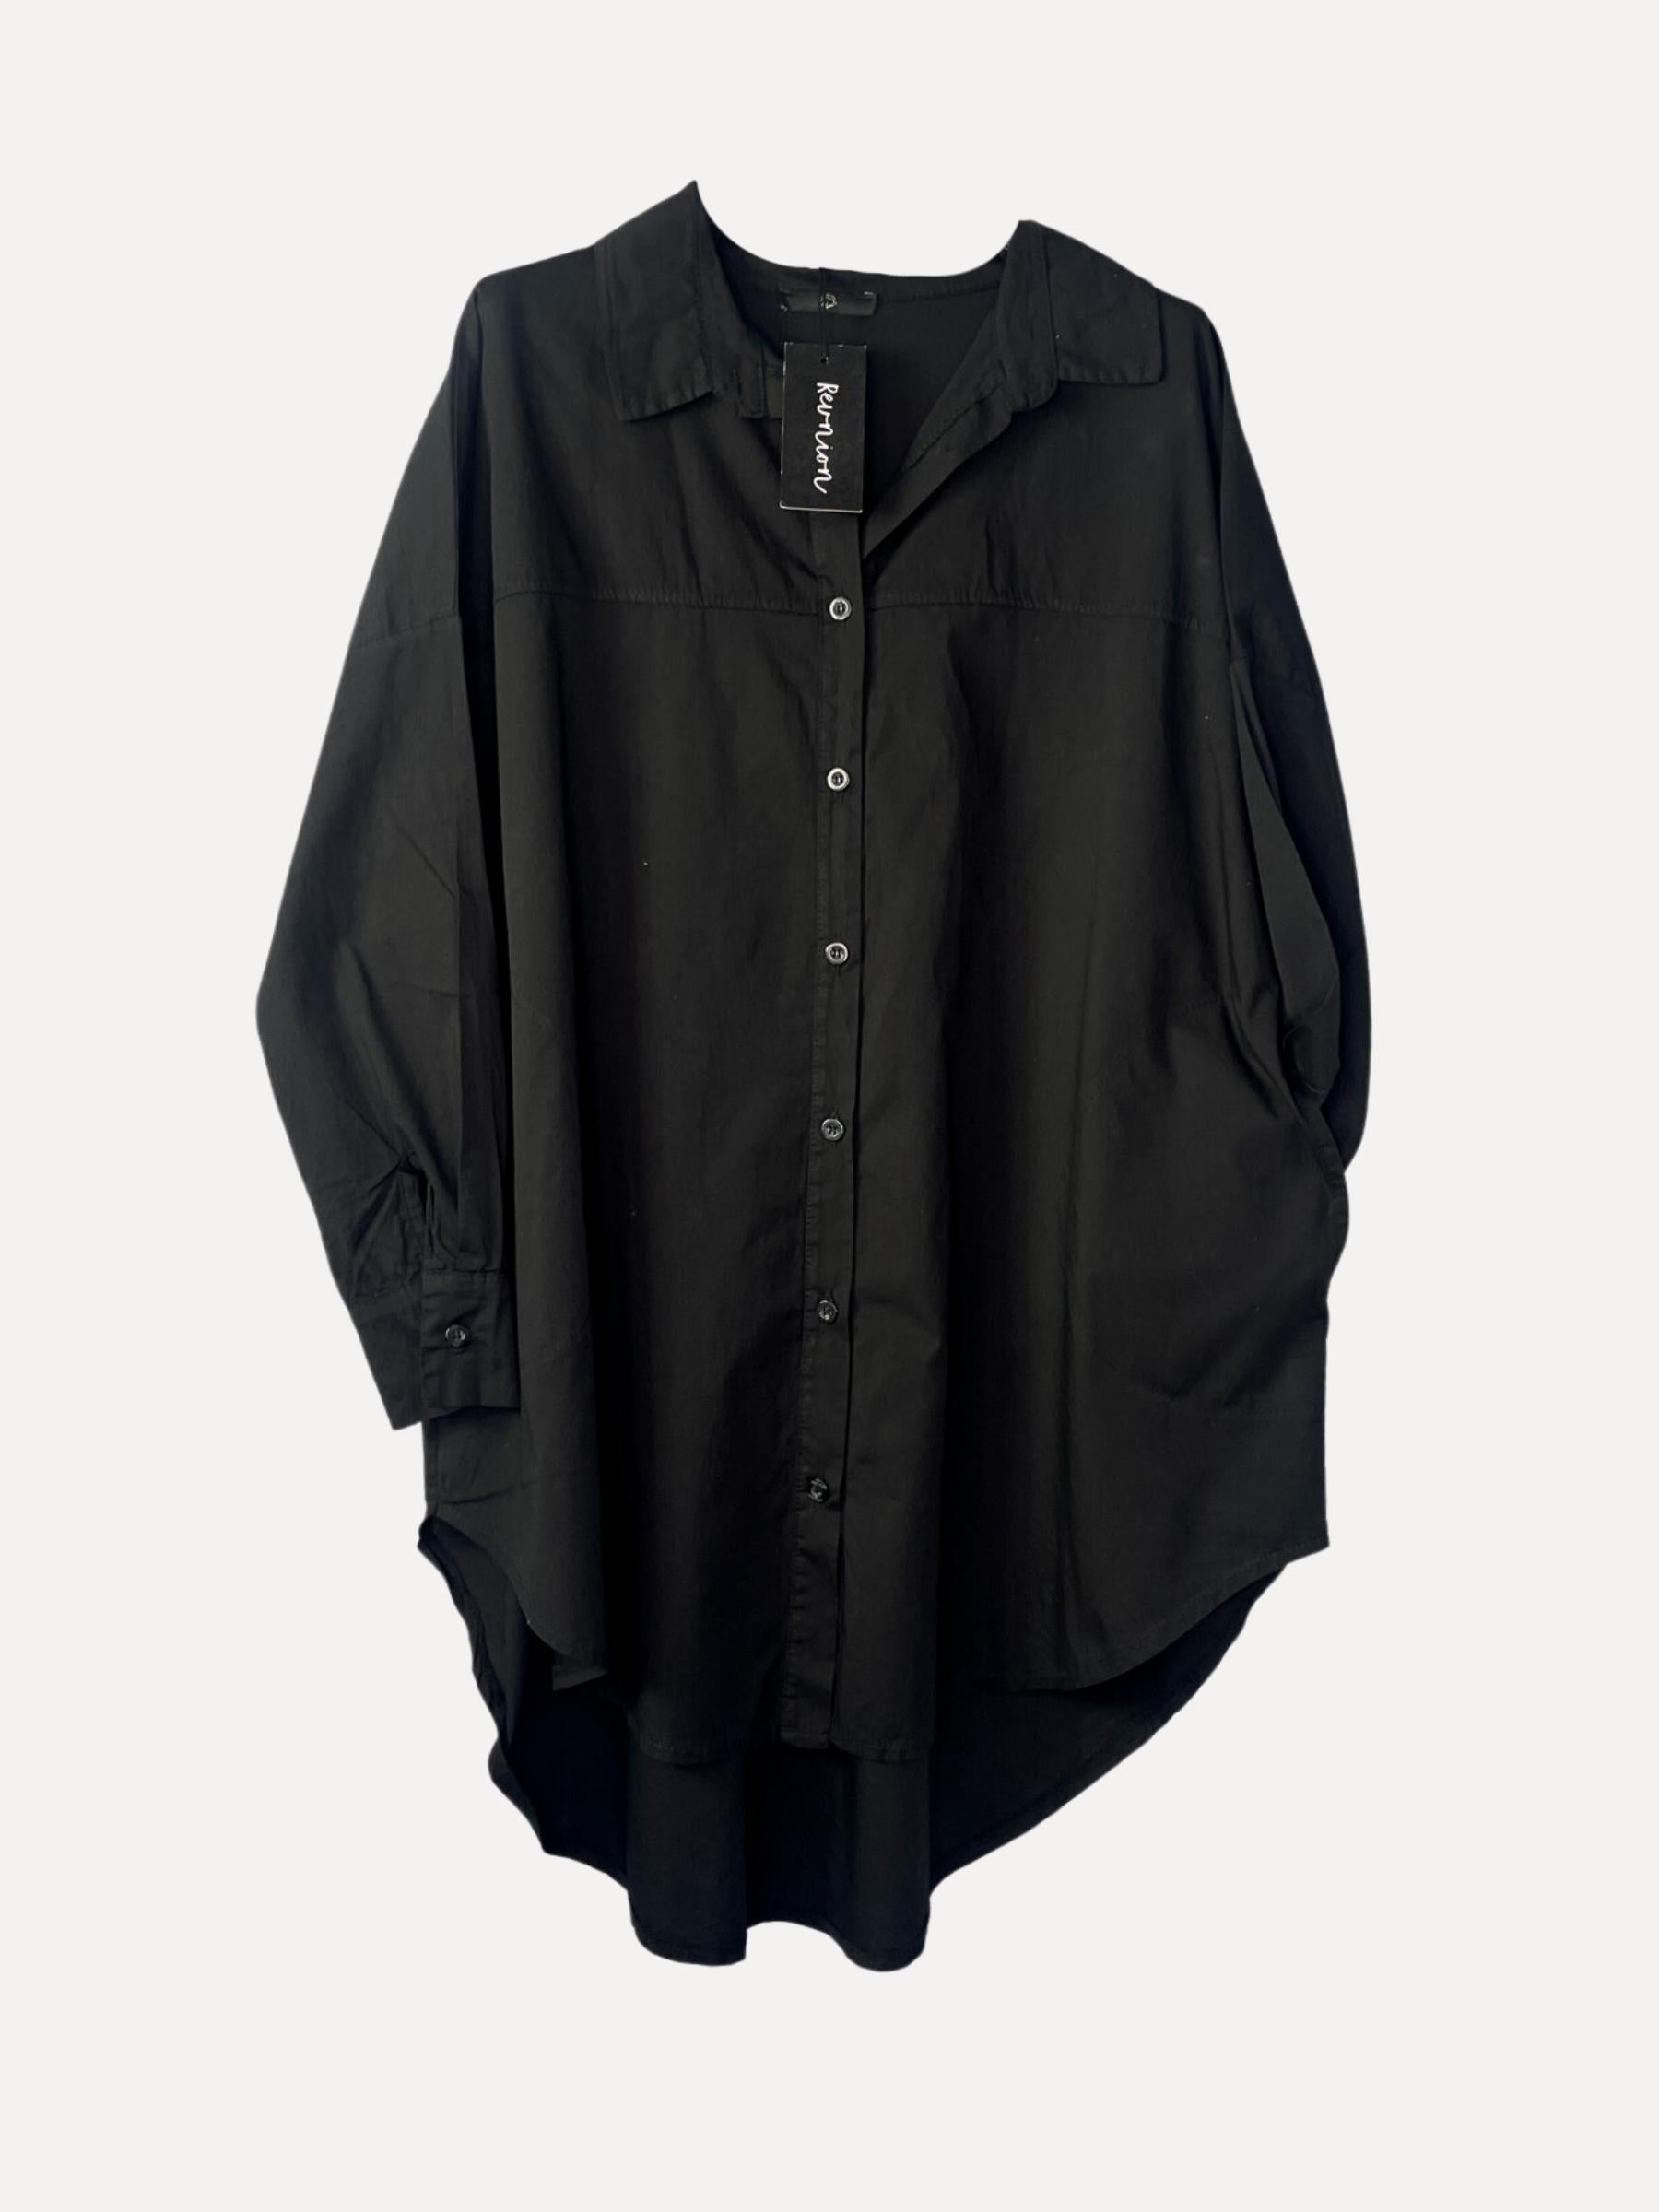 CAMPARI Shirt, Black